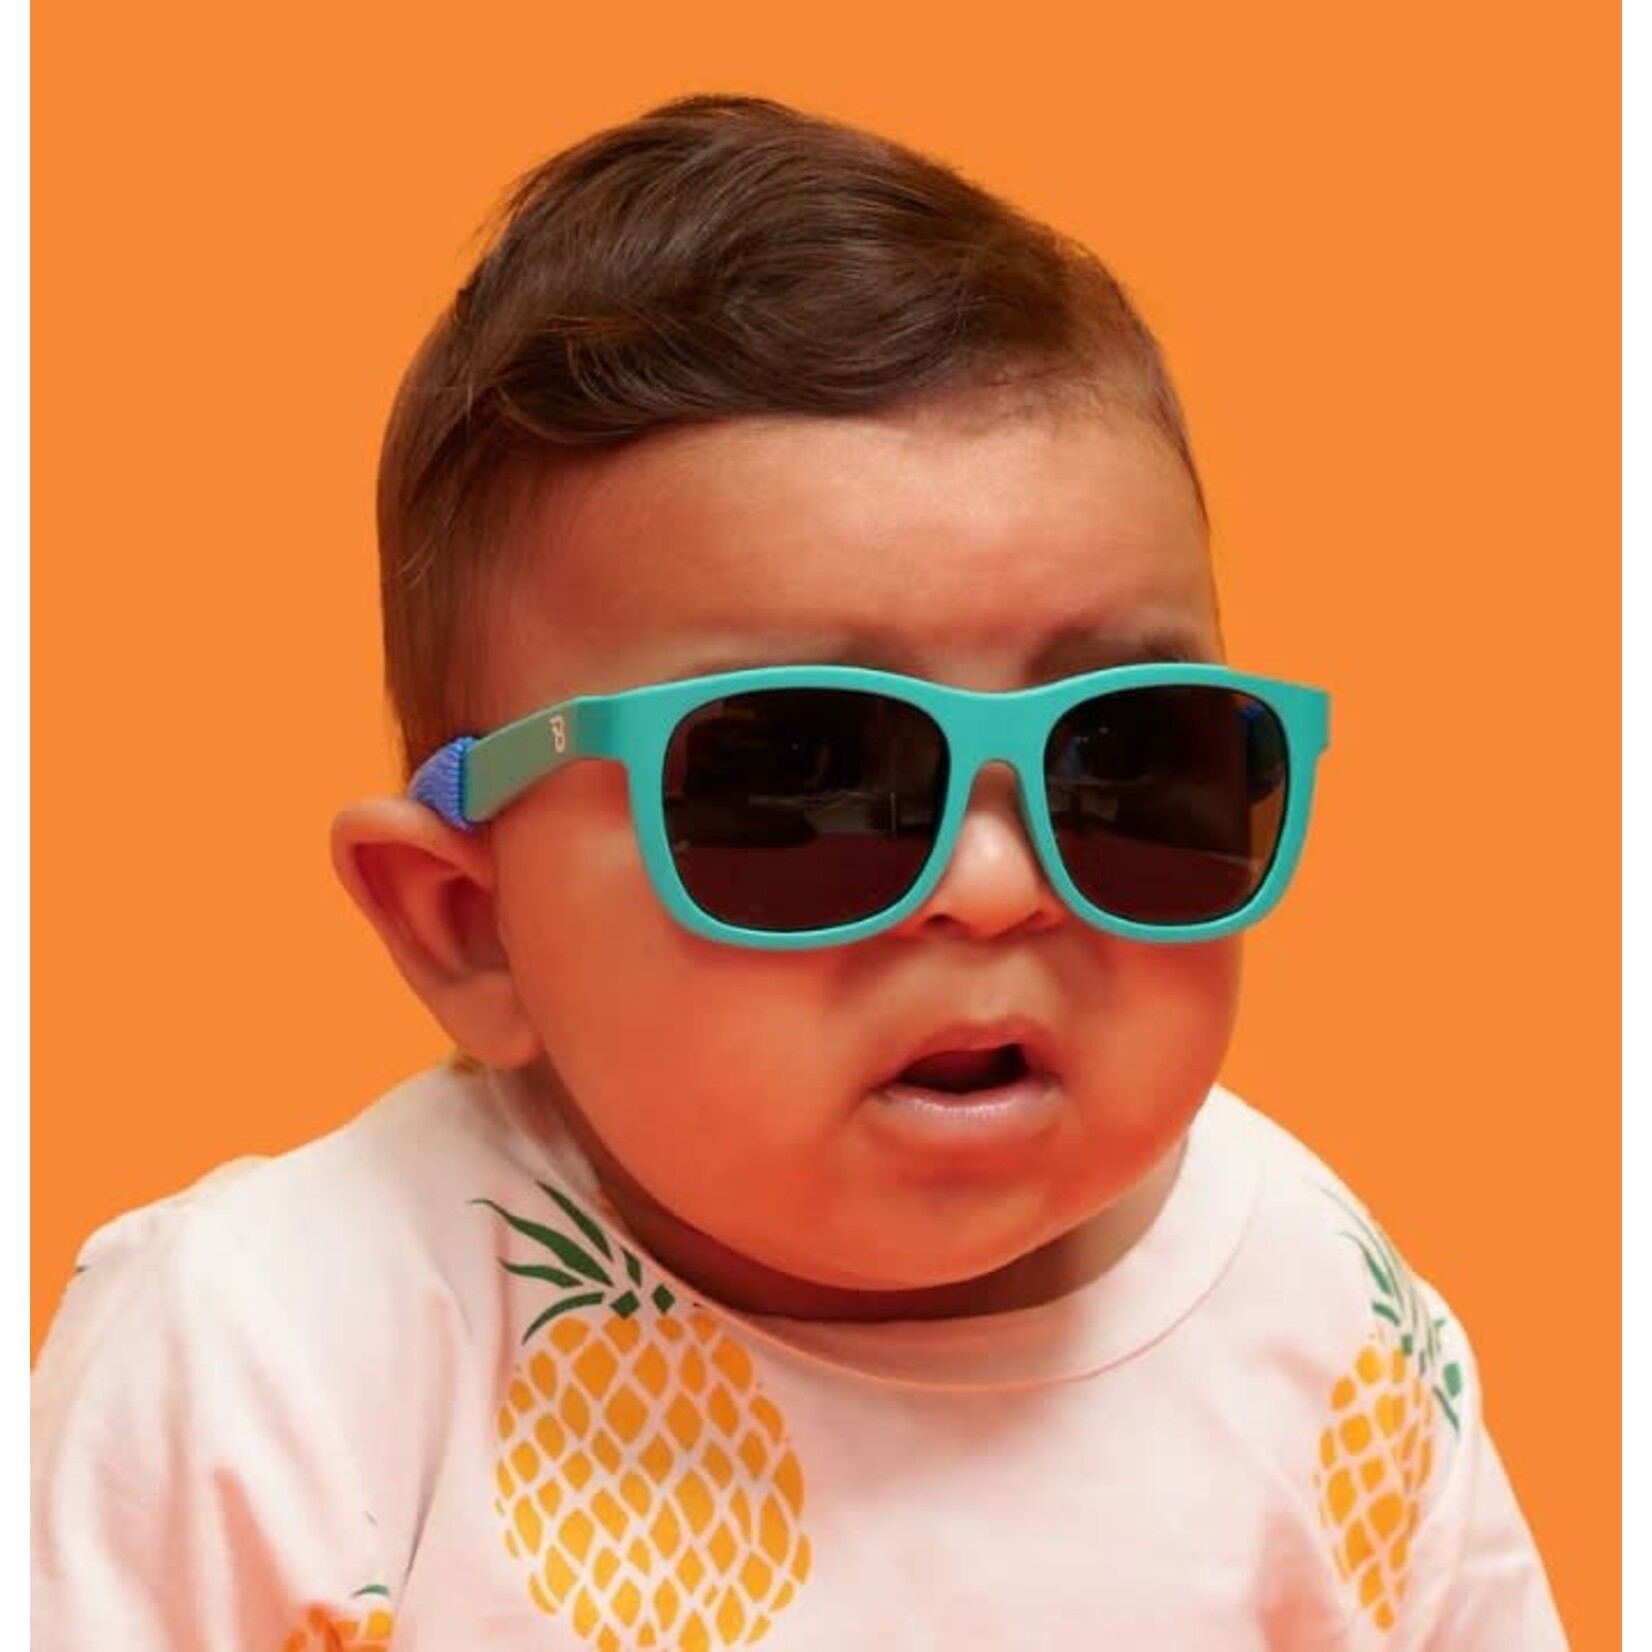 Babiators BABIATORS - Children's Sunglasses 'Navigator - Turquoise - Tropical tide`